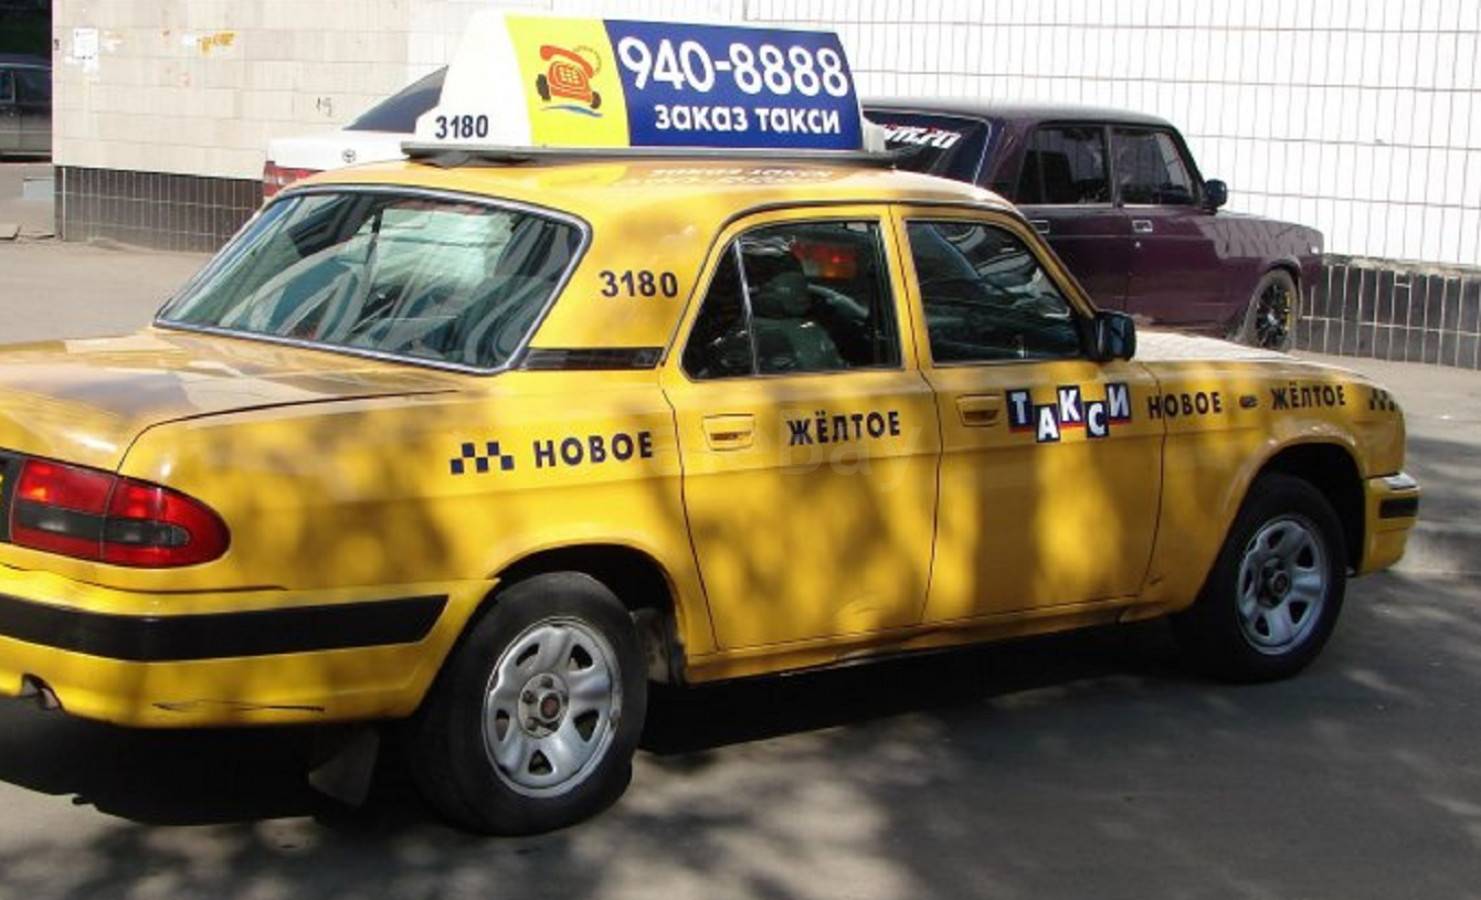 Аренда такси на газу. ГАЗ 31105 новое желтое такси. ГАЗ 31029 новое жёлтое такси. ГАЗ 3110 новое желтое такси. ГАЗ 3110 такси.